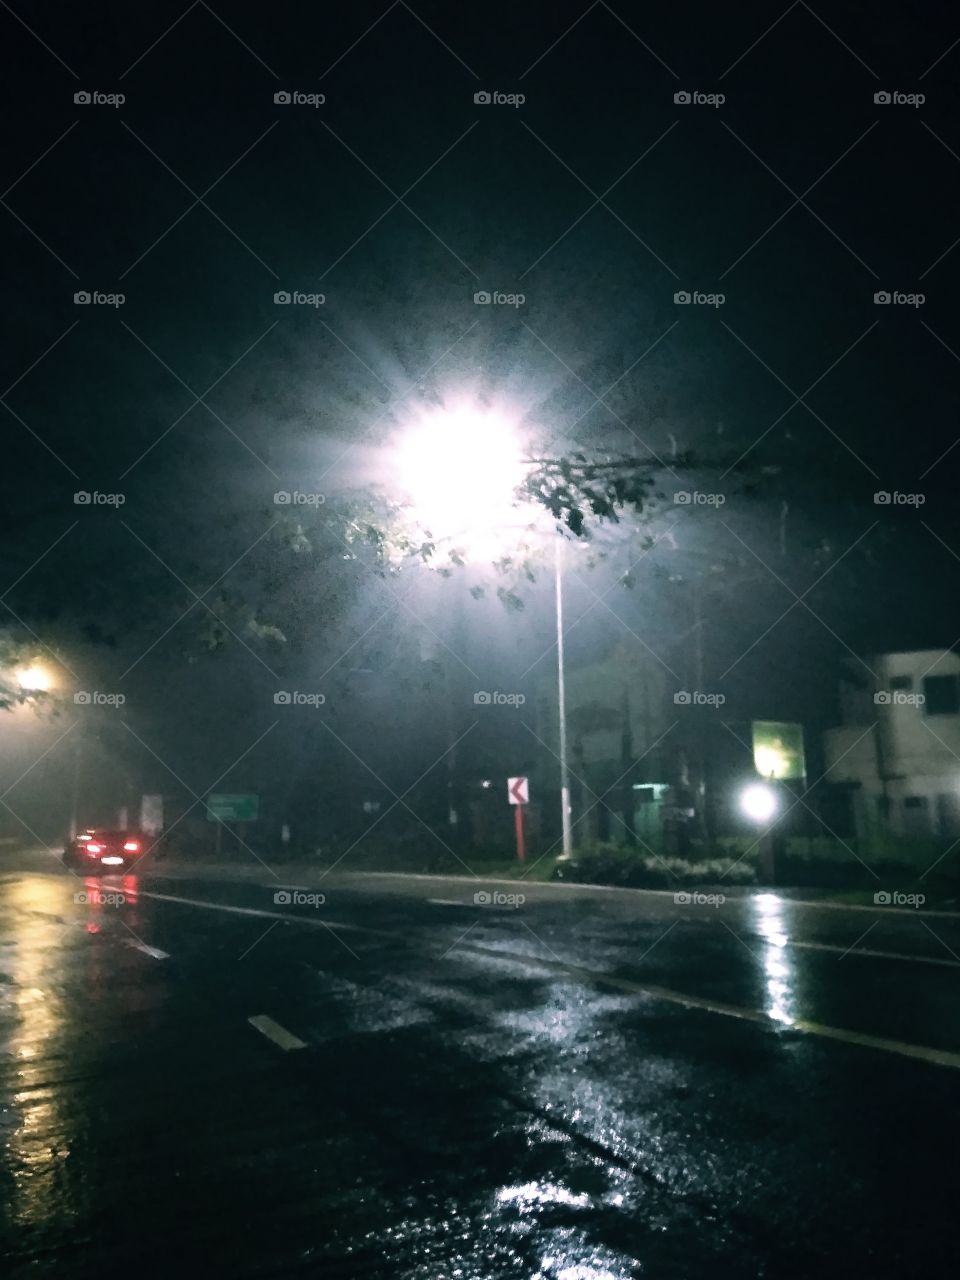 light Street lamp wet road raining storm strong wind